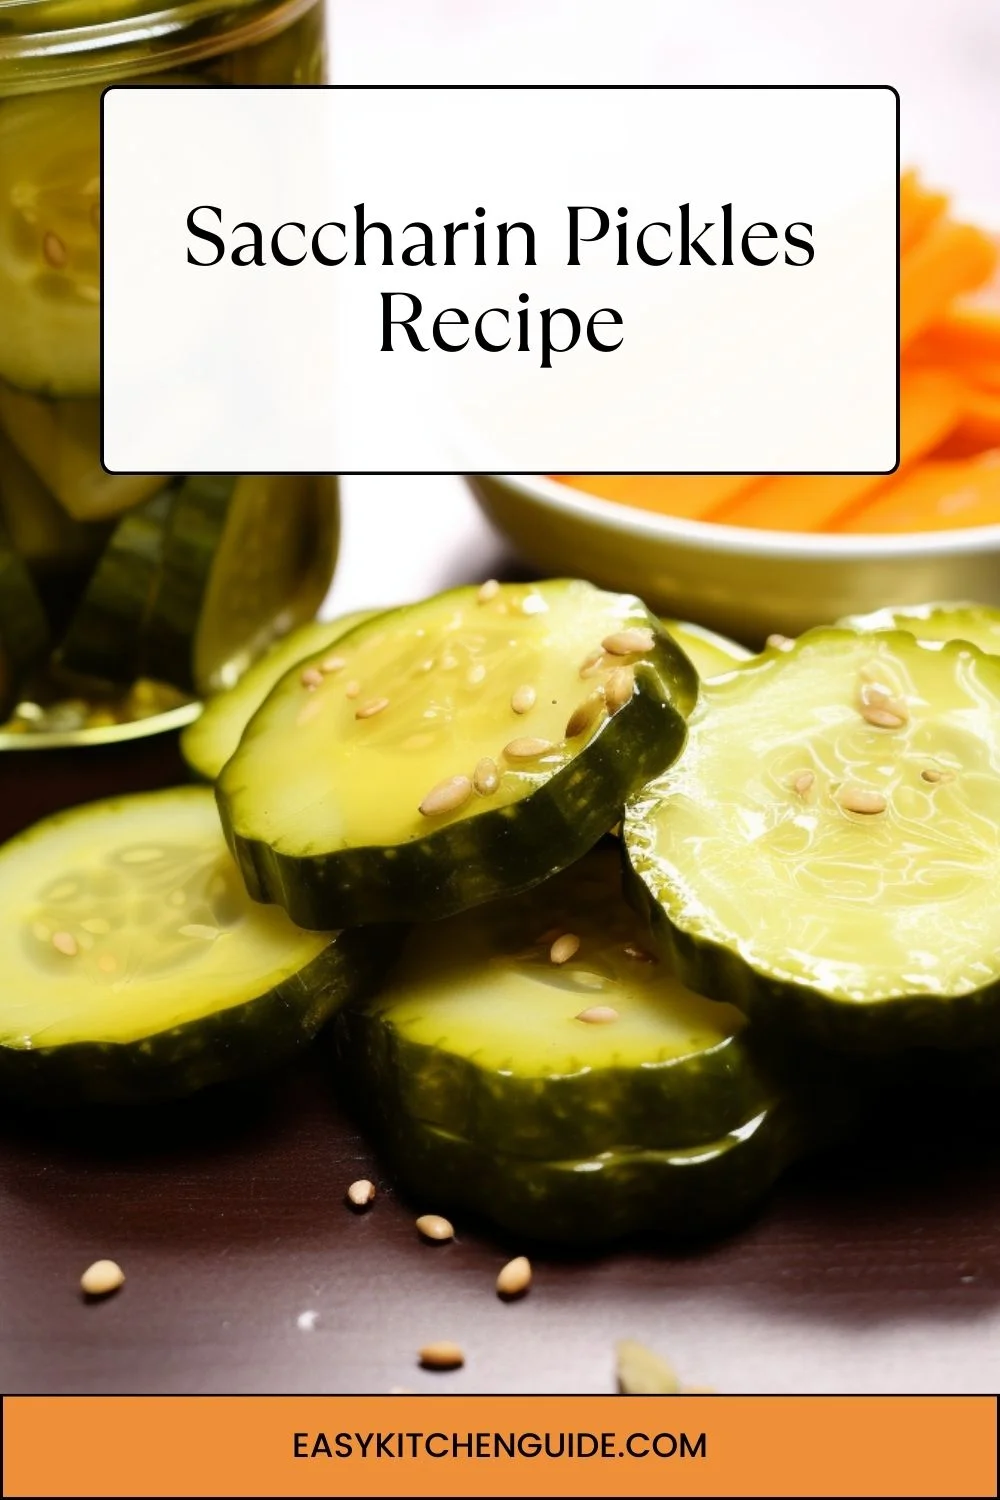 Saccharin Pickles Recipe